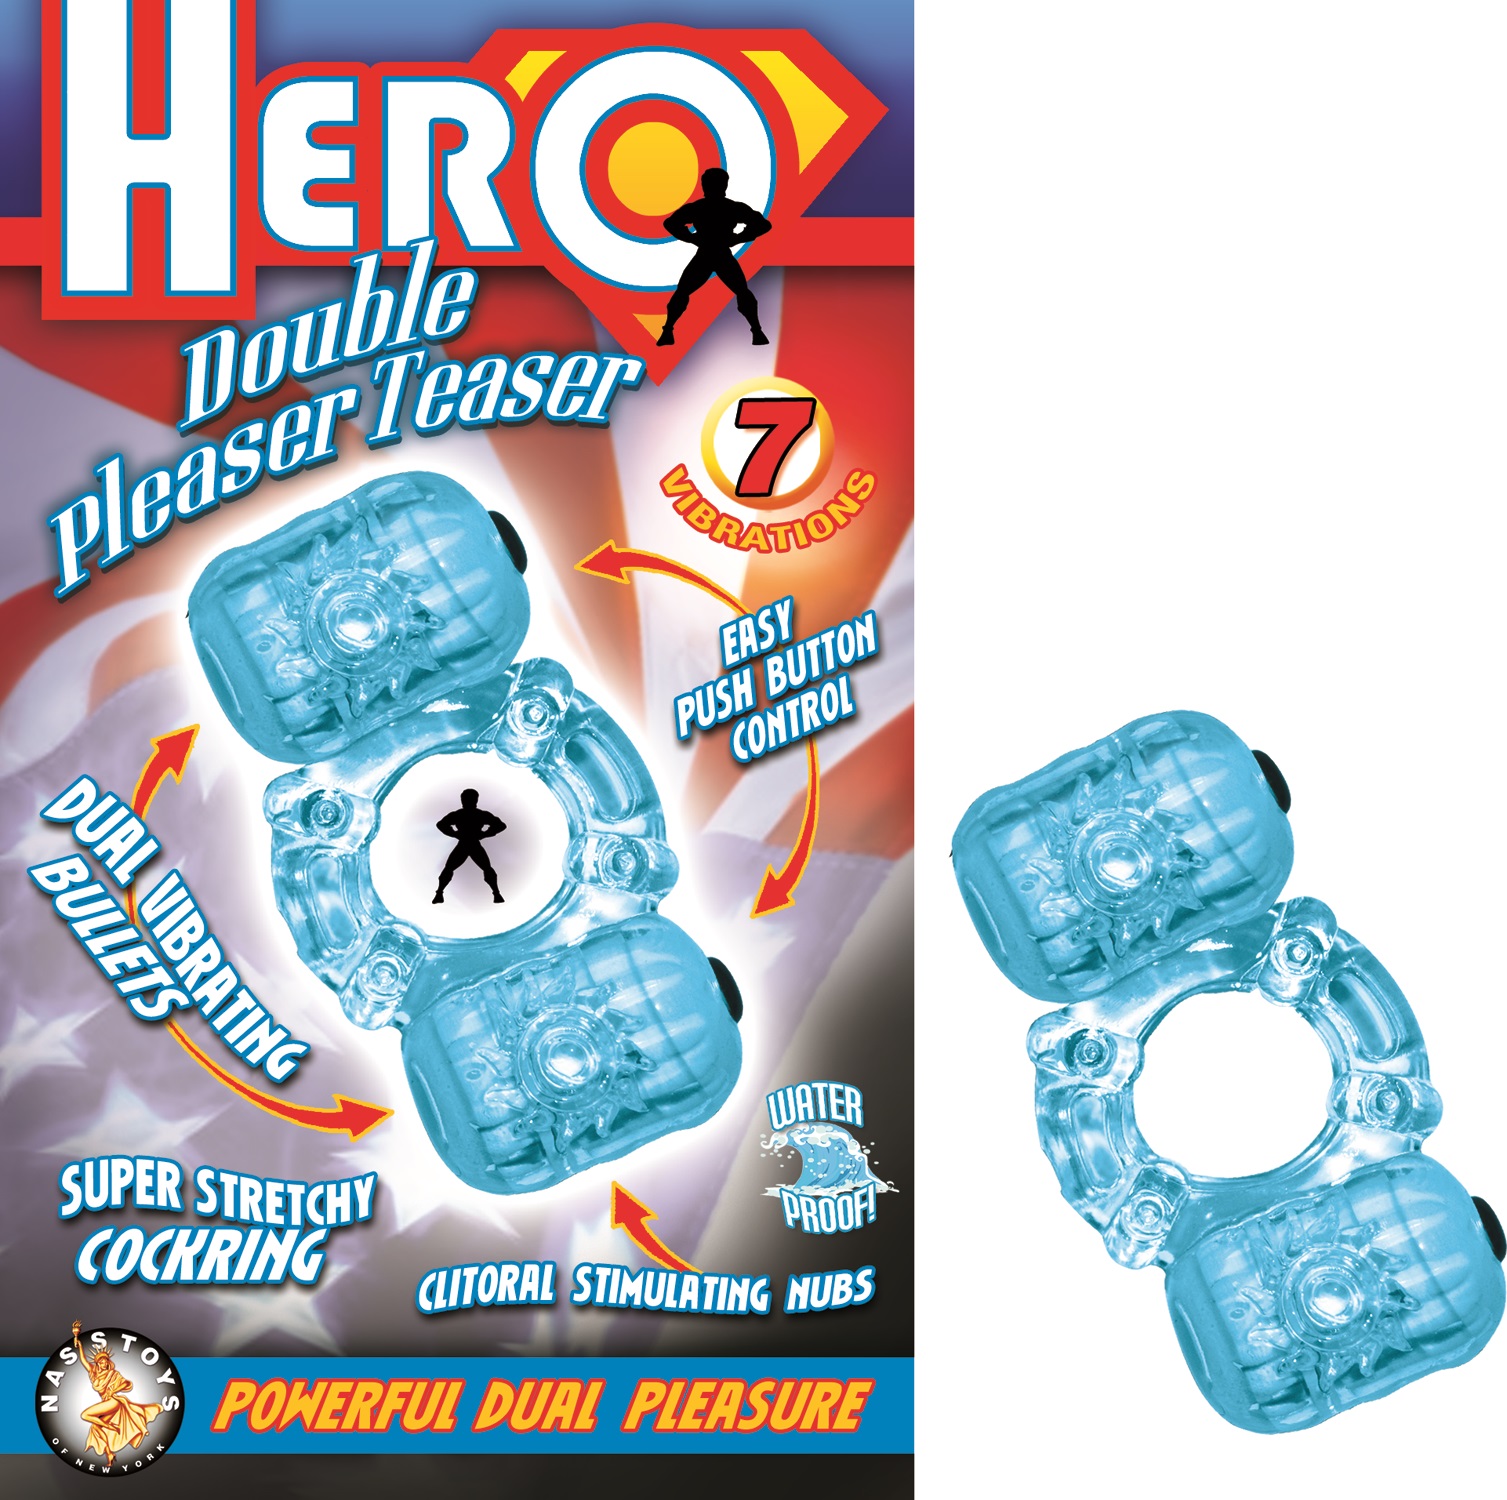 Hero+Double+Pleaser+Teaser+Vibrating+Waterproof+Cock+Ring